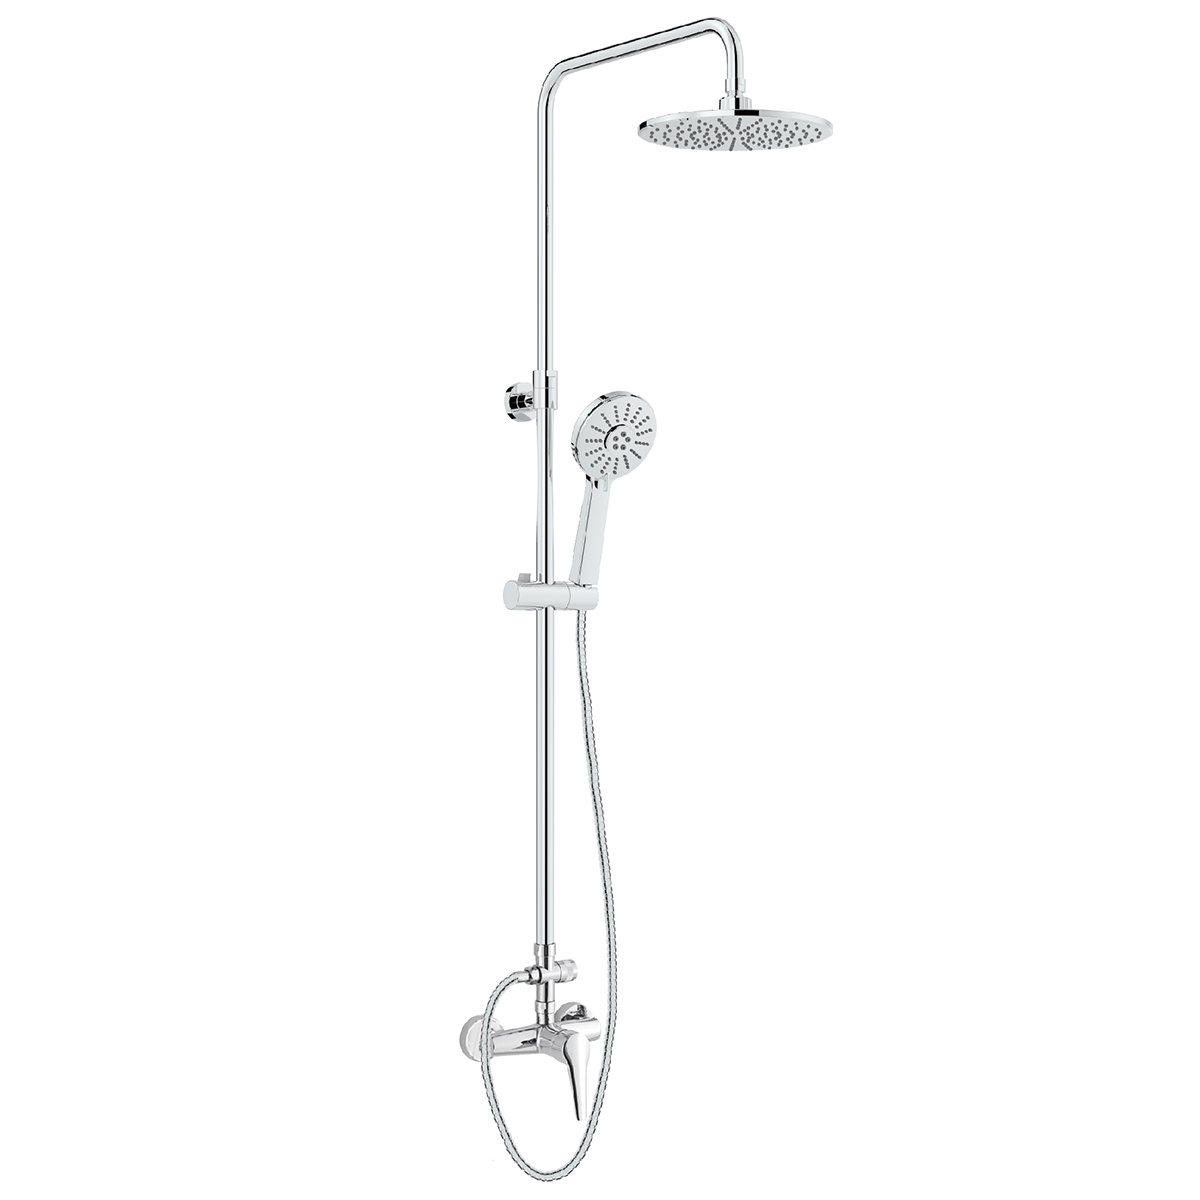 Factory Supply Sliding Bar Manufacturer - Shower fixtures L1401 shower column – Sinyu